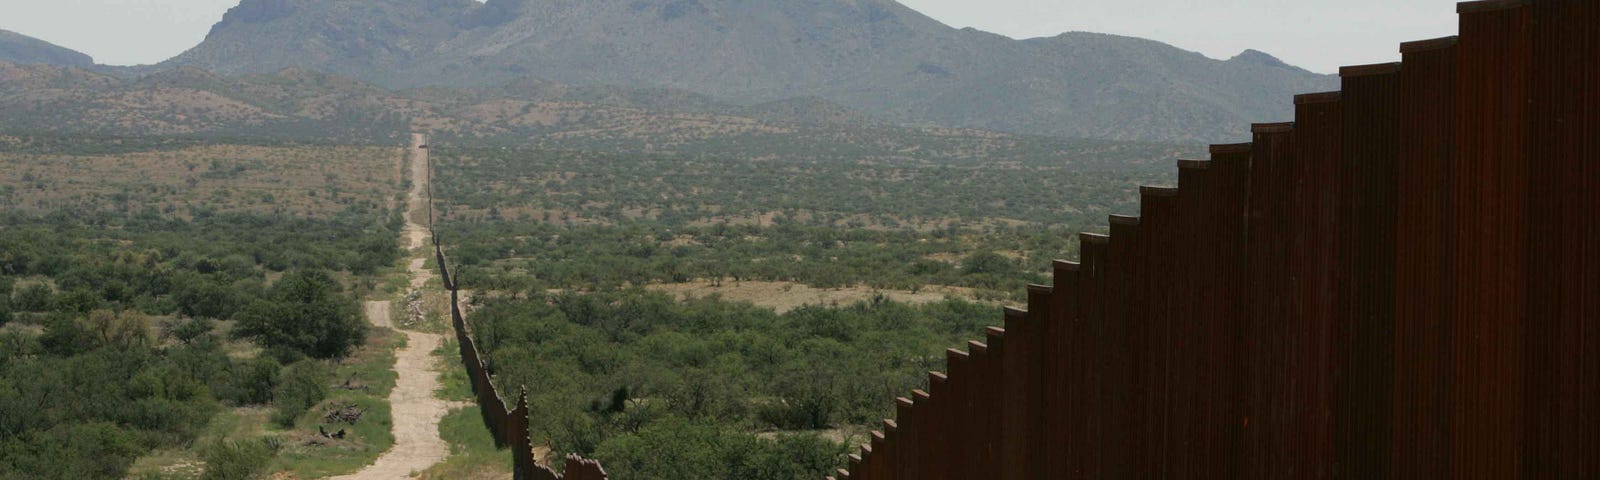 Wall separating the U.S. Mexico border near El Paso.